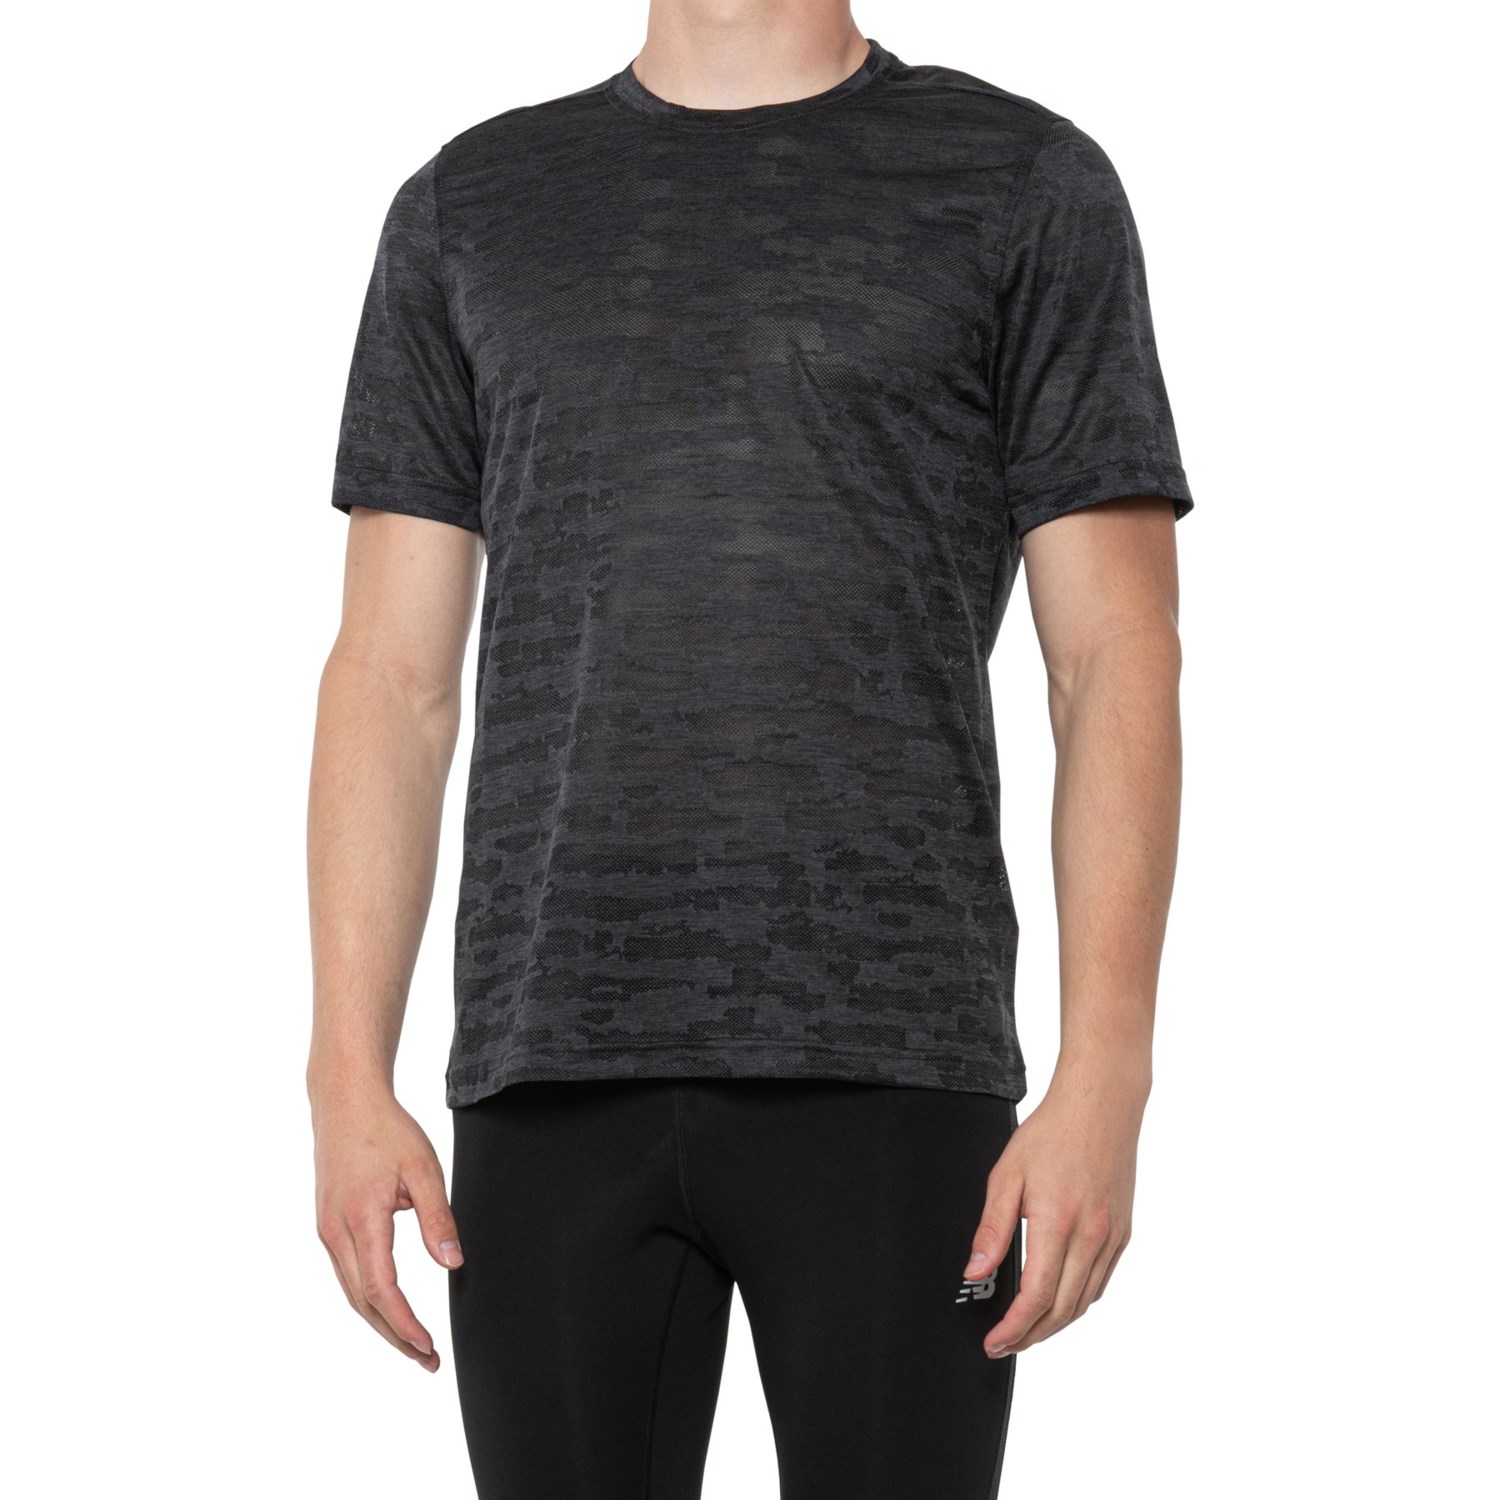 ASICS Knit Jacquard Shirt - Short Sleeve (For Men)